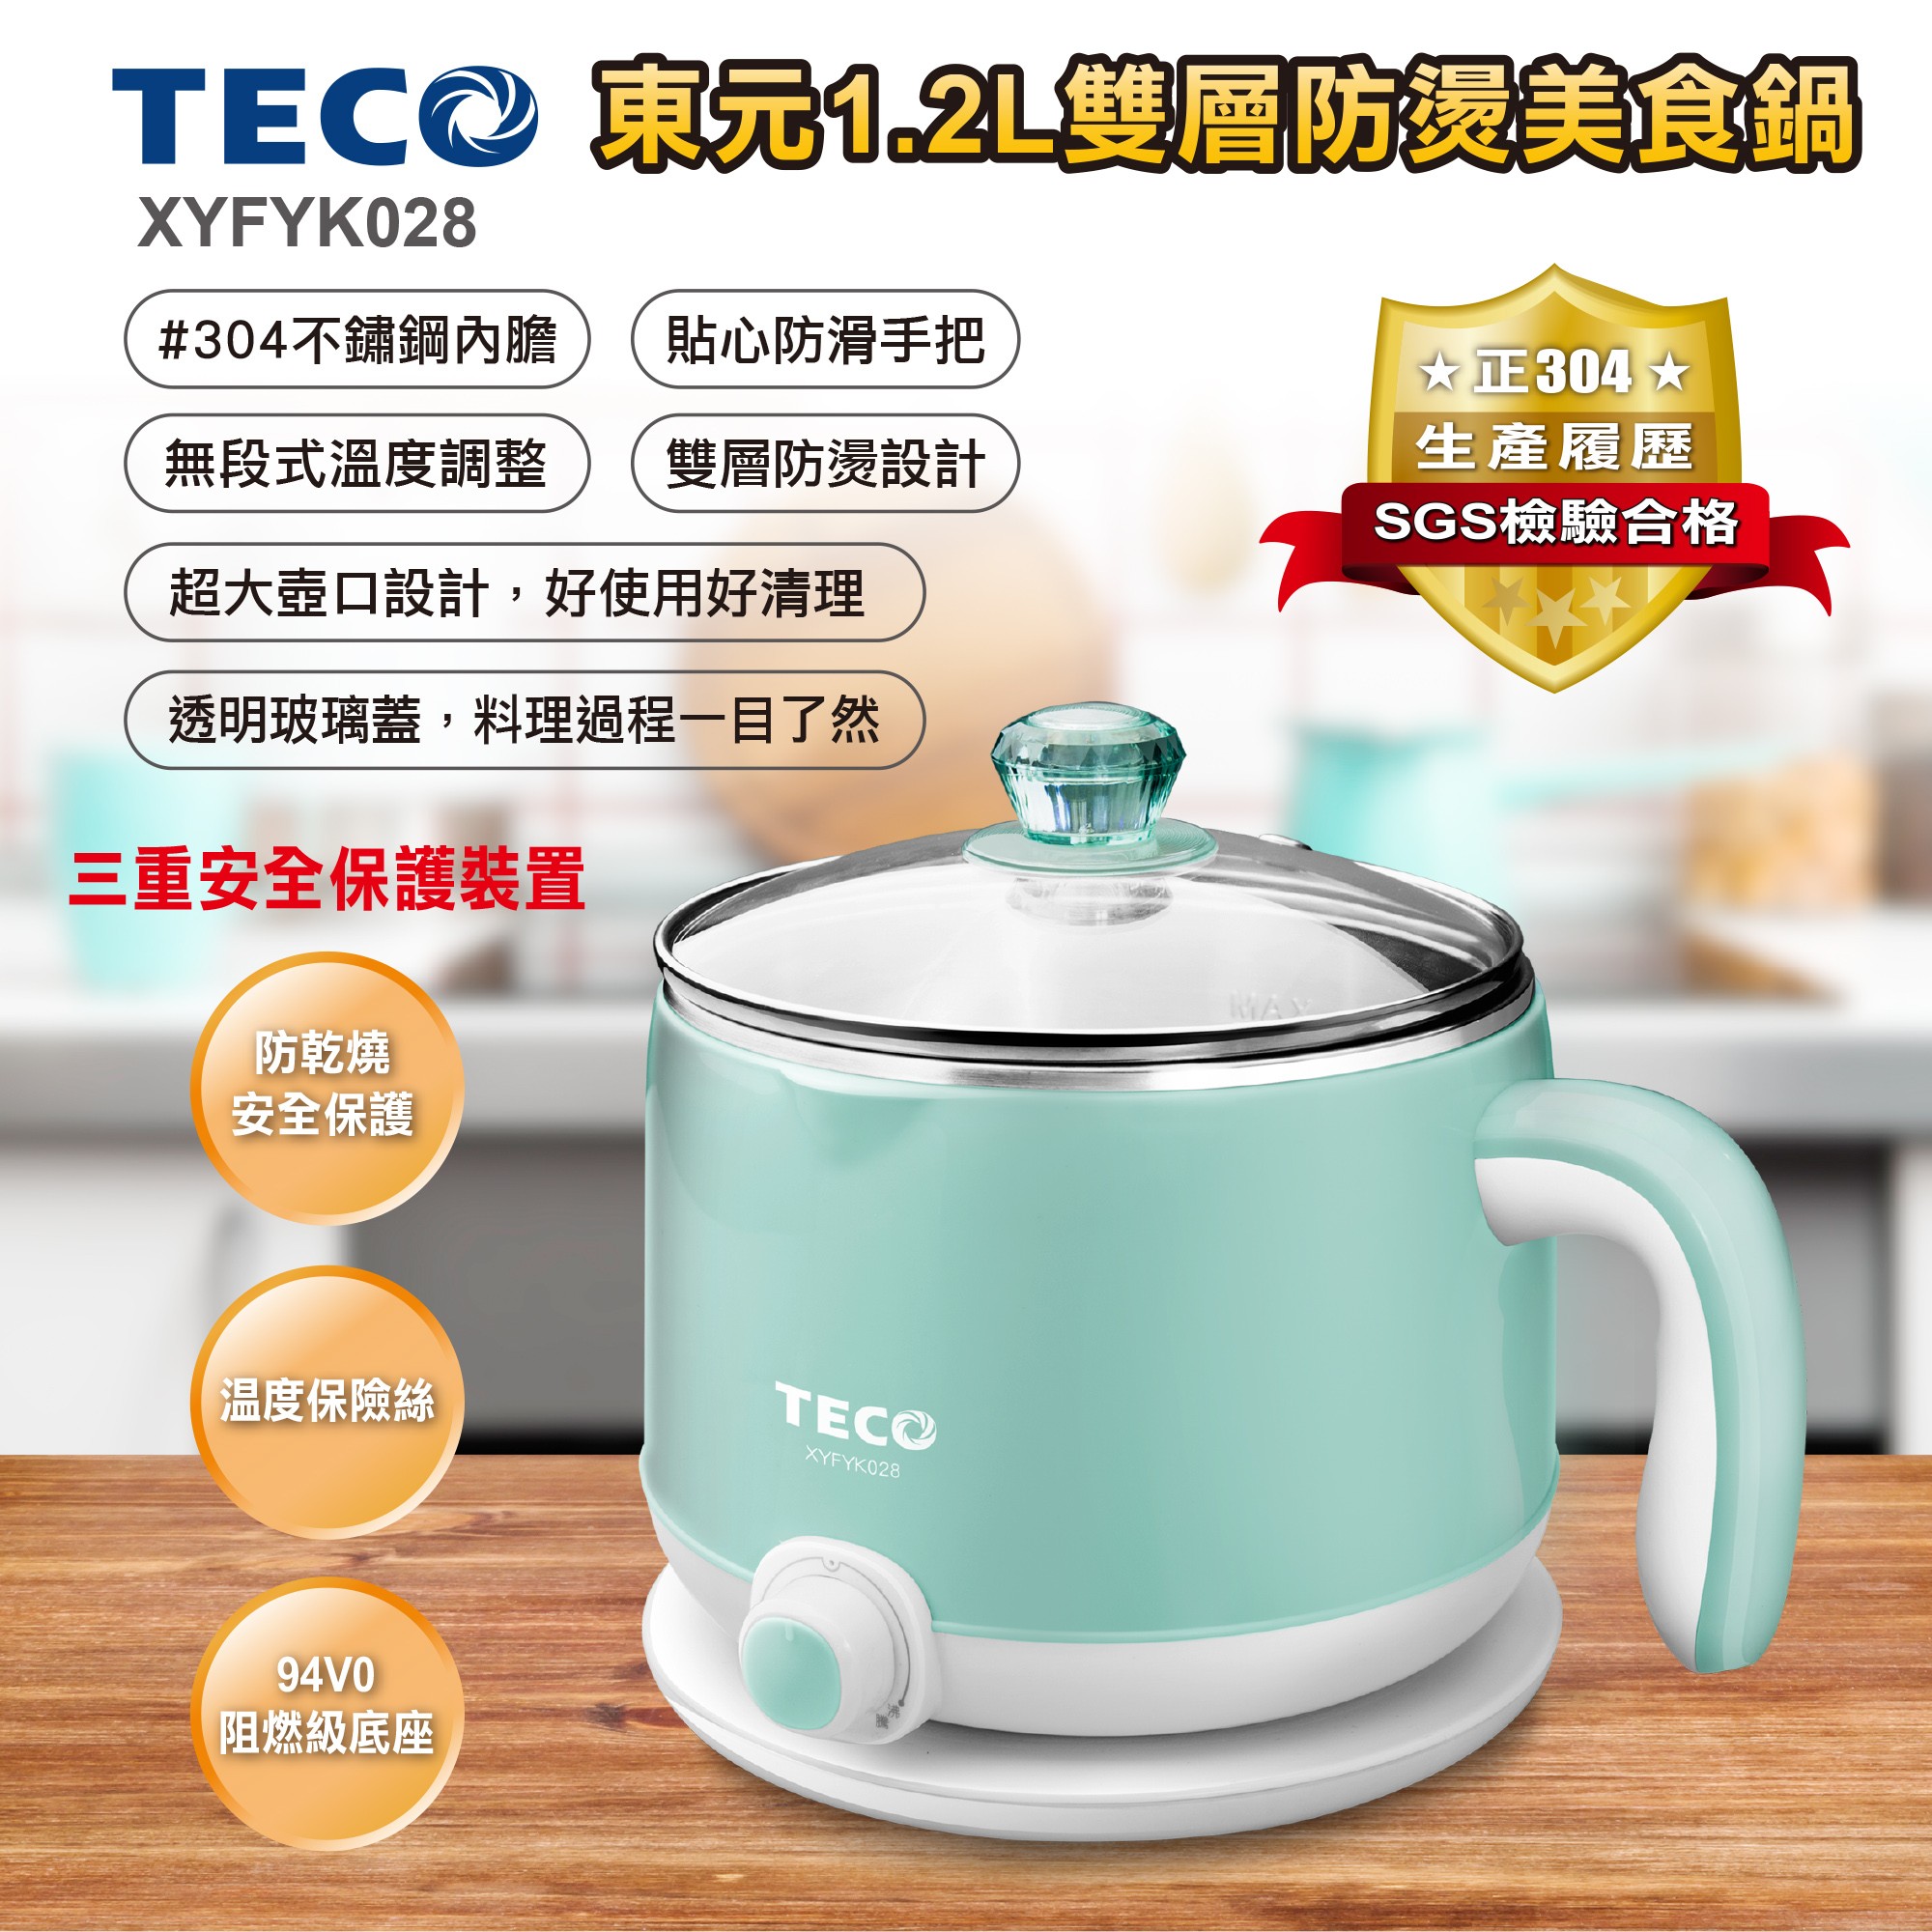 TECO東元 1.2L雙層防燙美食鍋 XYFYK028